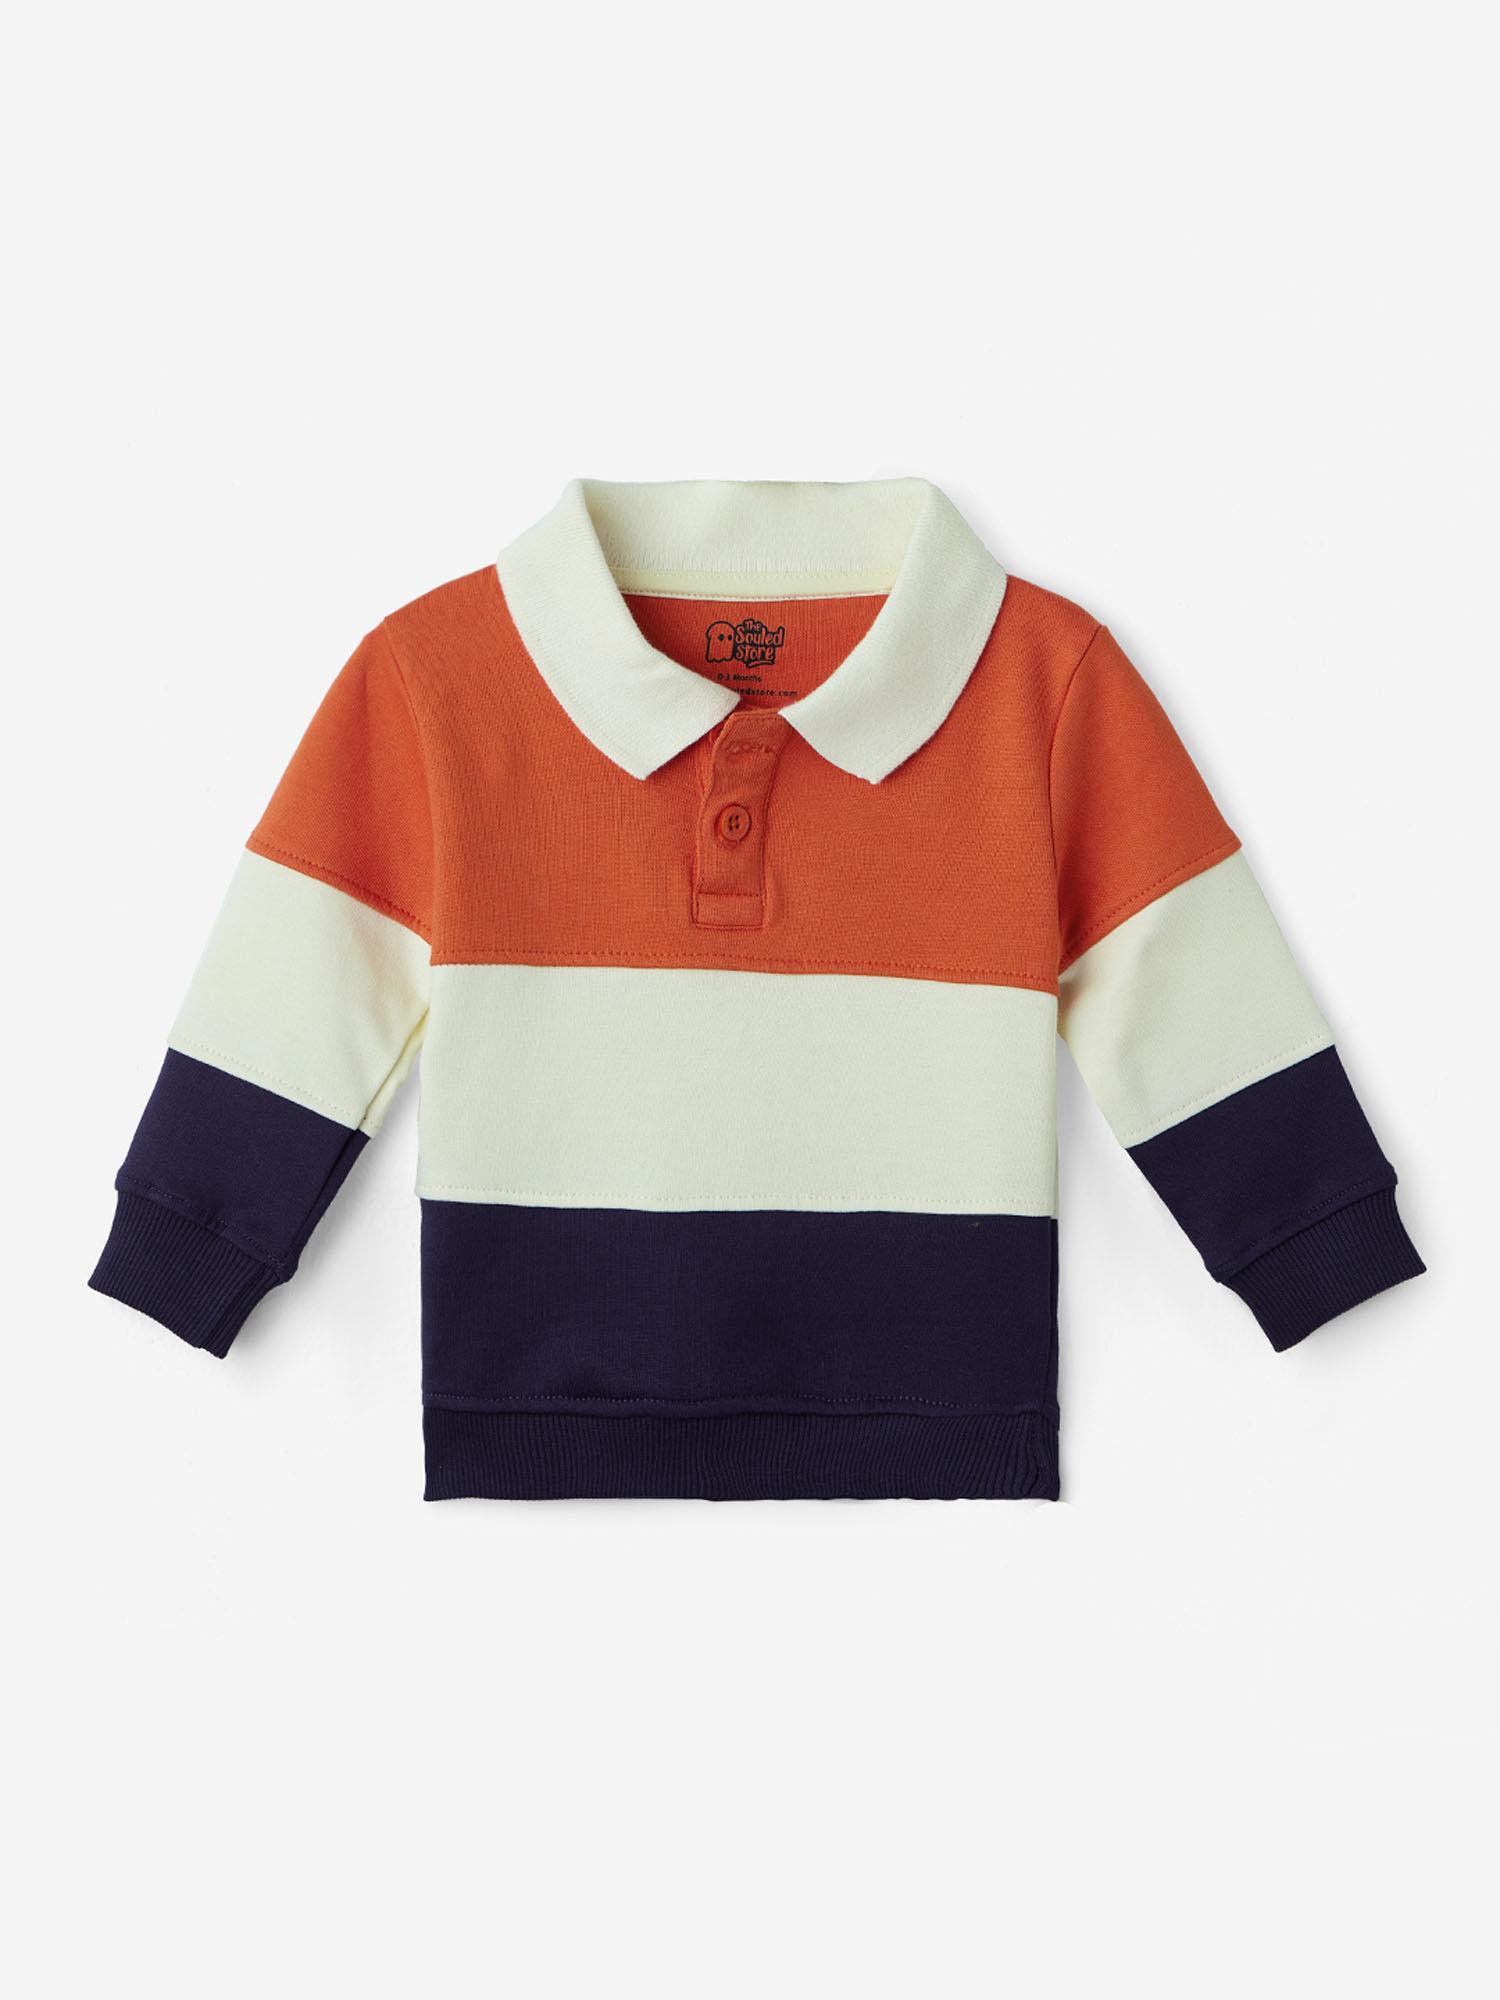 tss originals crush boys cotton sweatshirt-multi-color